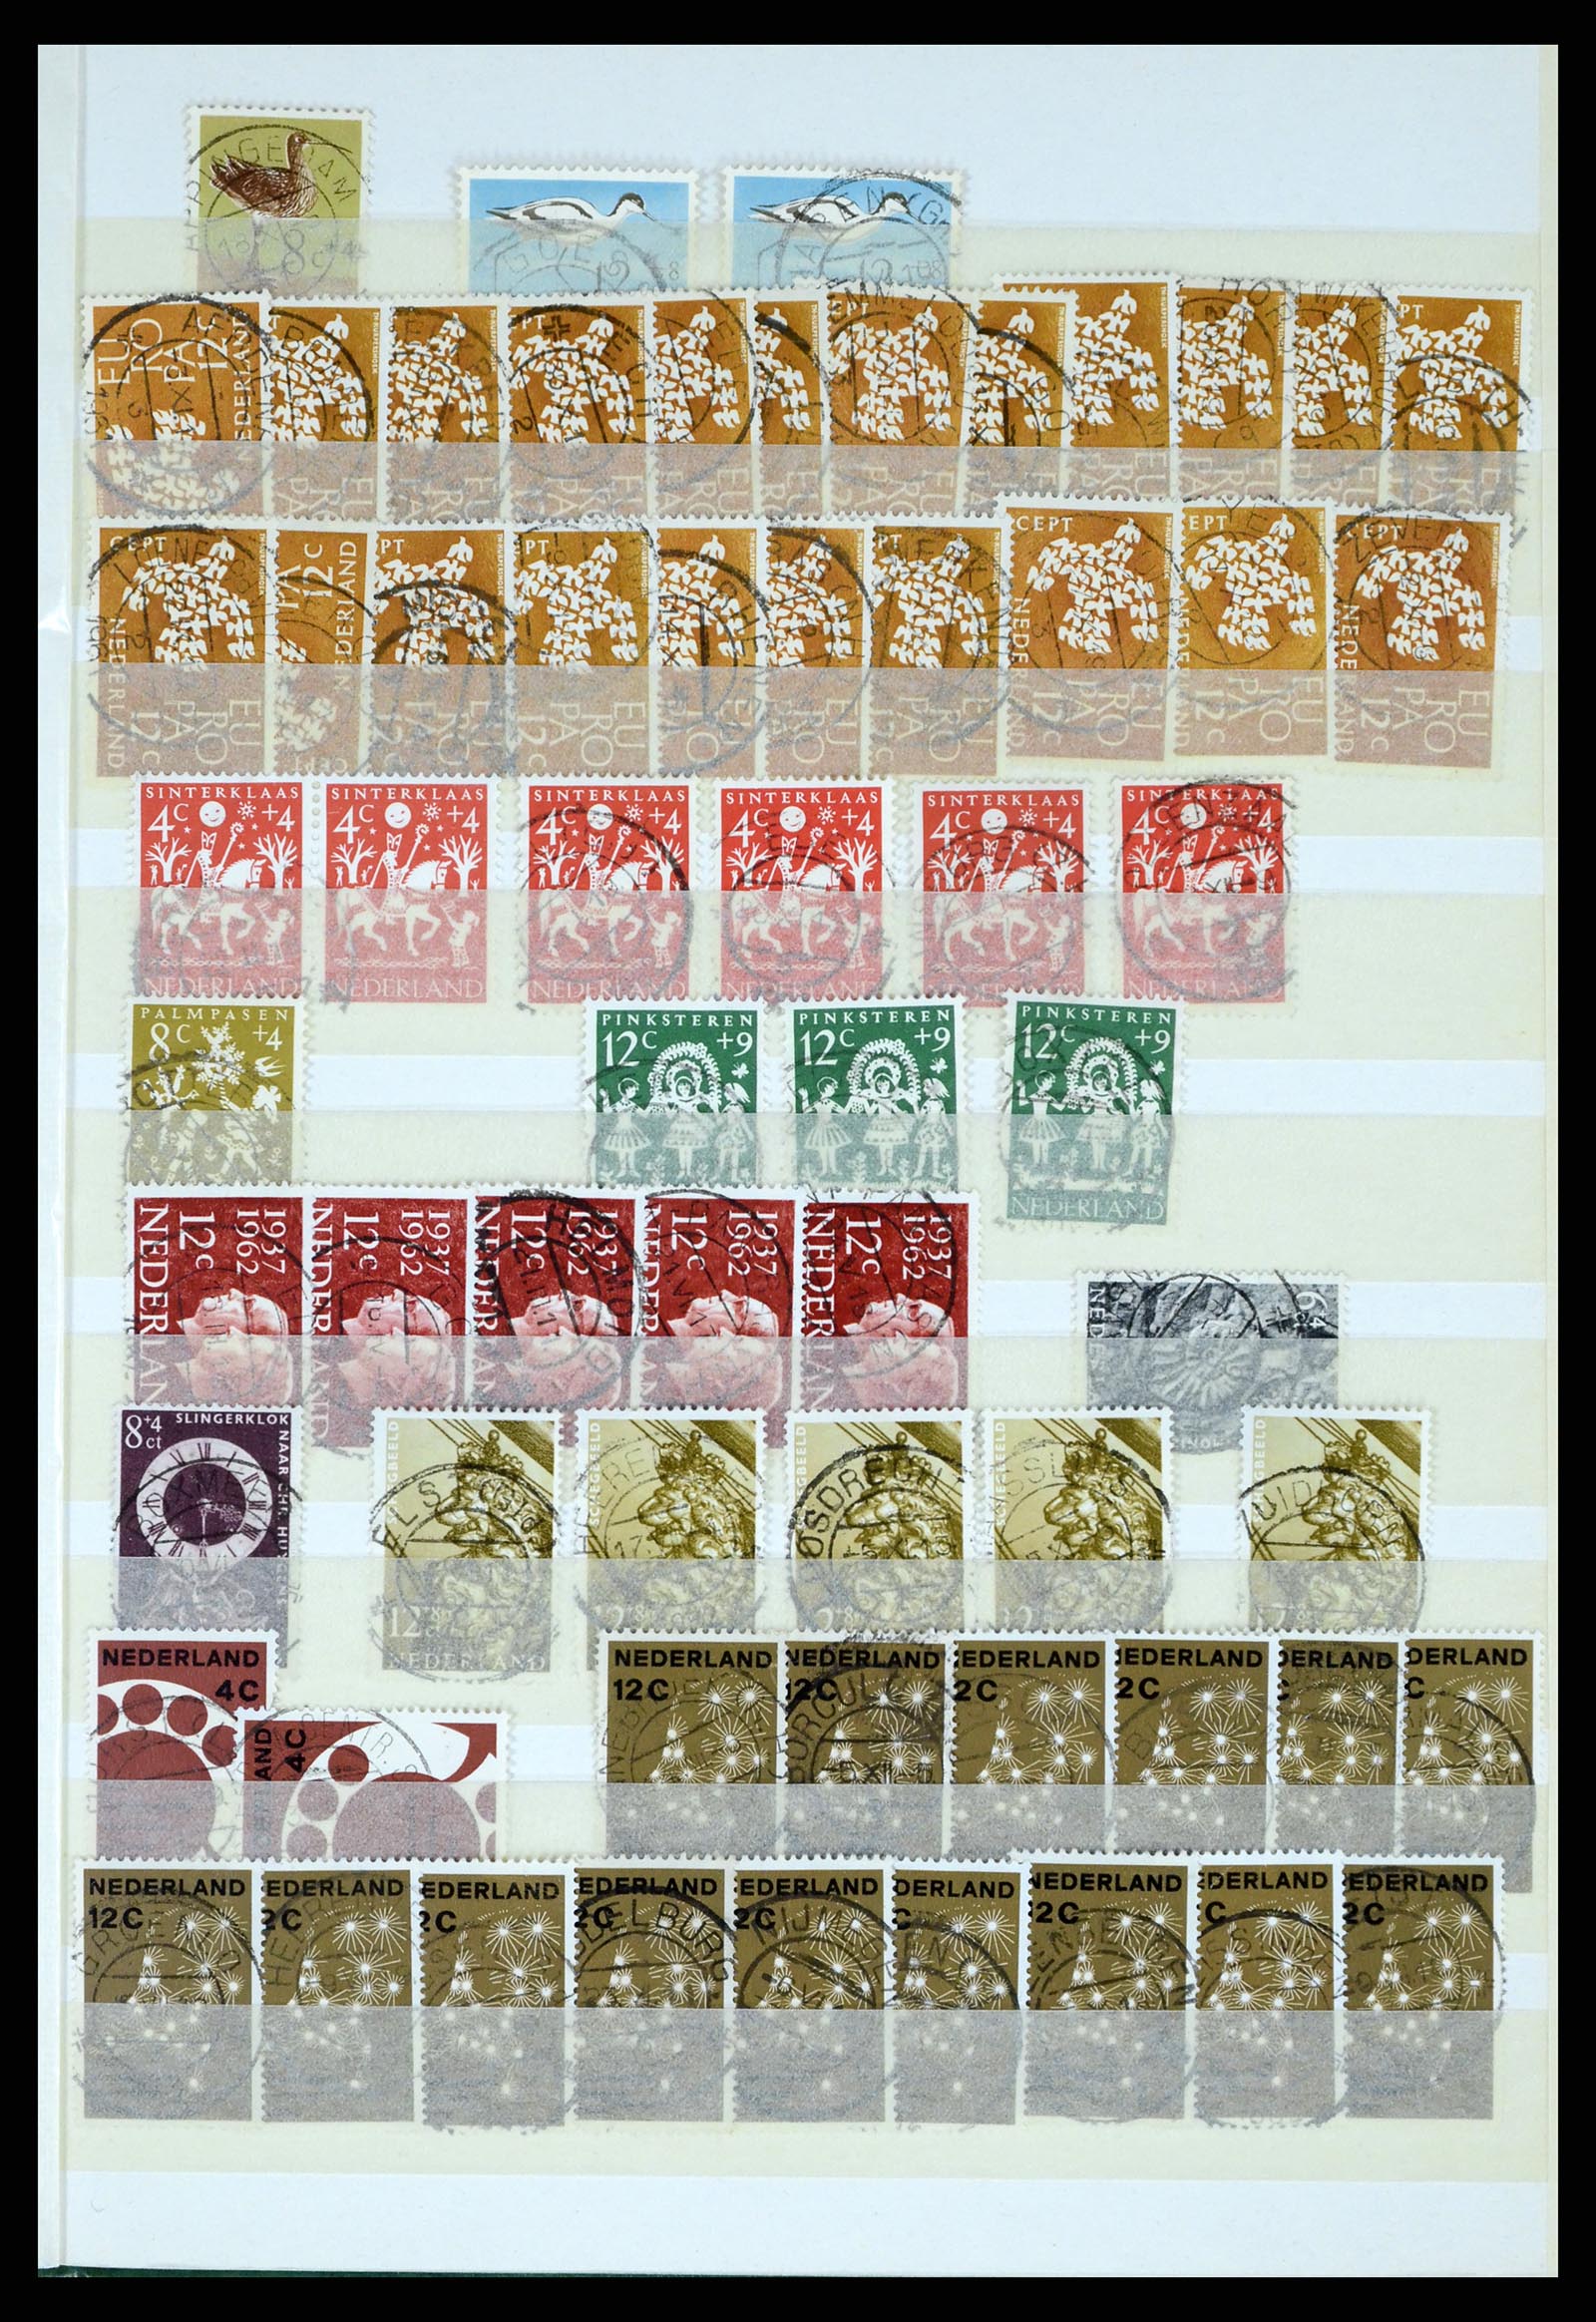 37424 055 - Stamp collection 37424 Netherlands shortbar cancels.